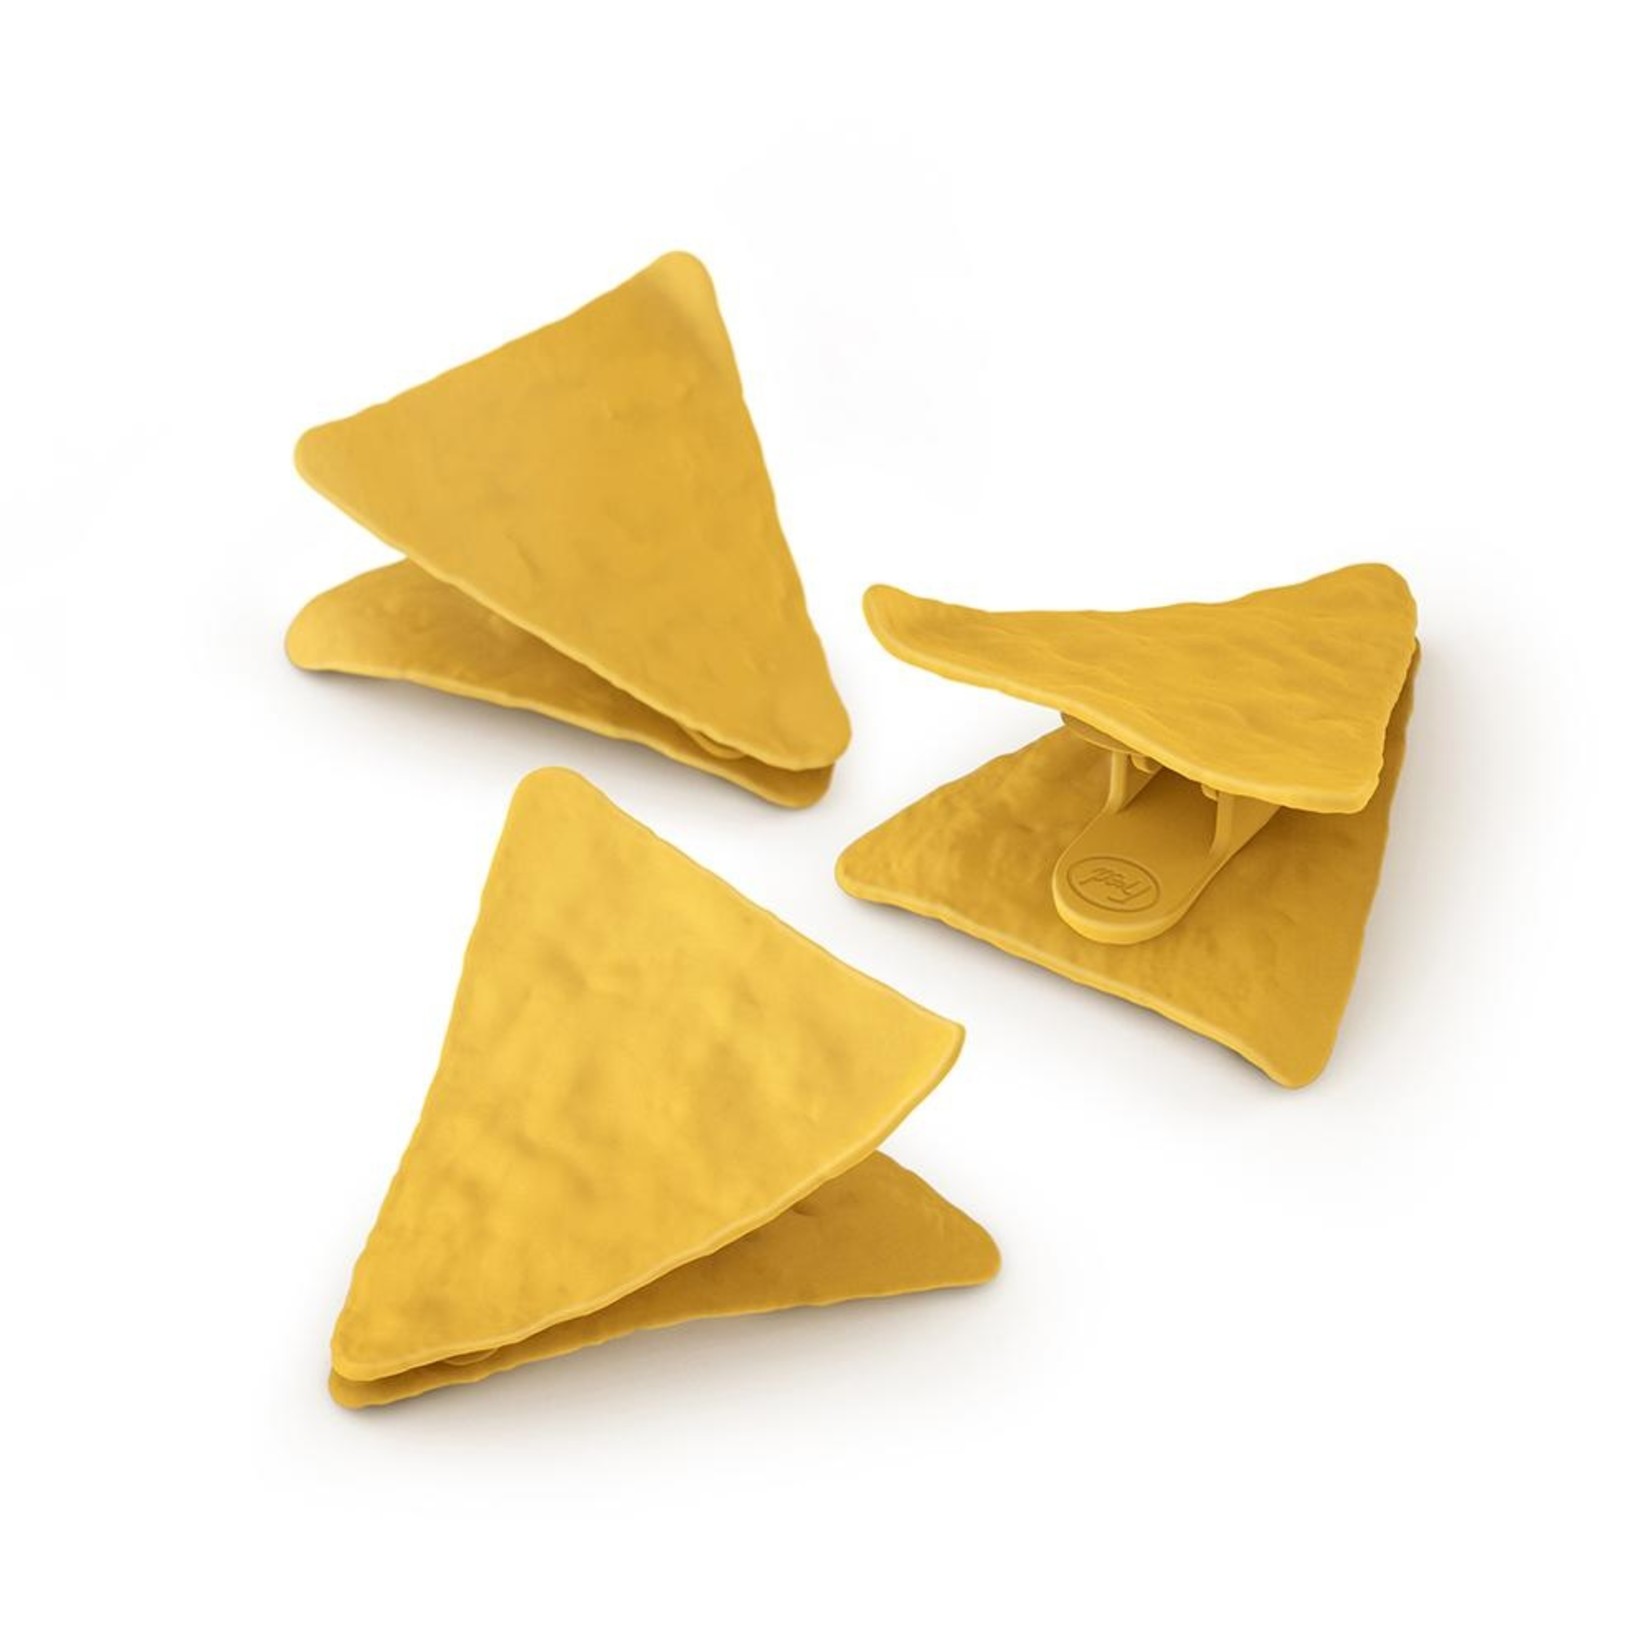 Fred & Friends Tortilla Chip Bag Clip